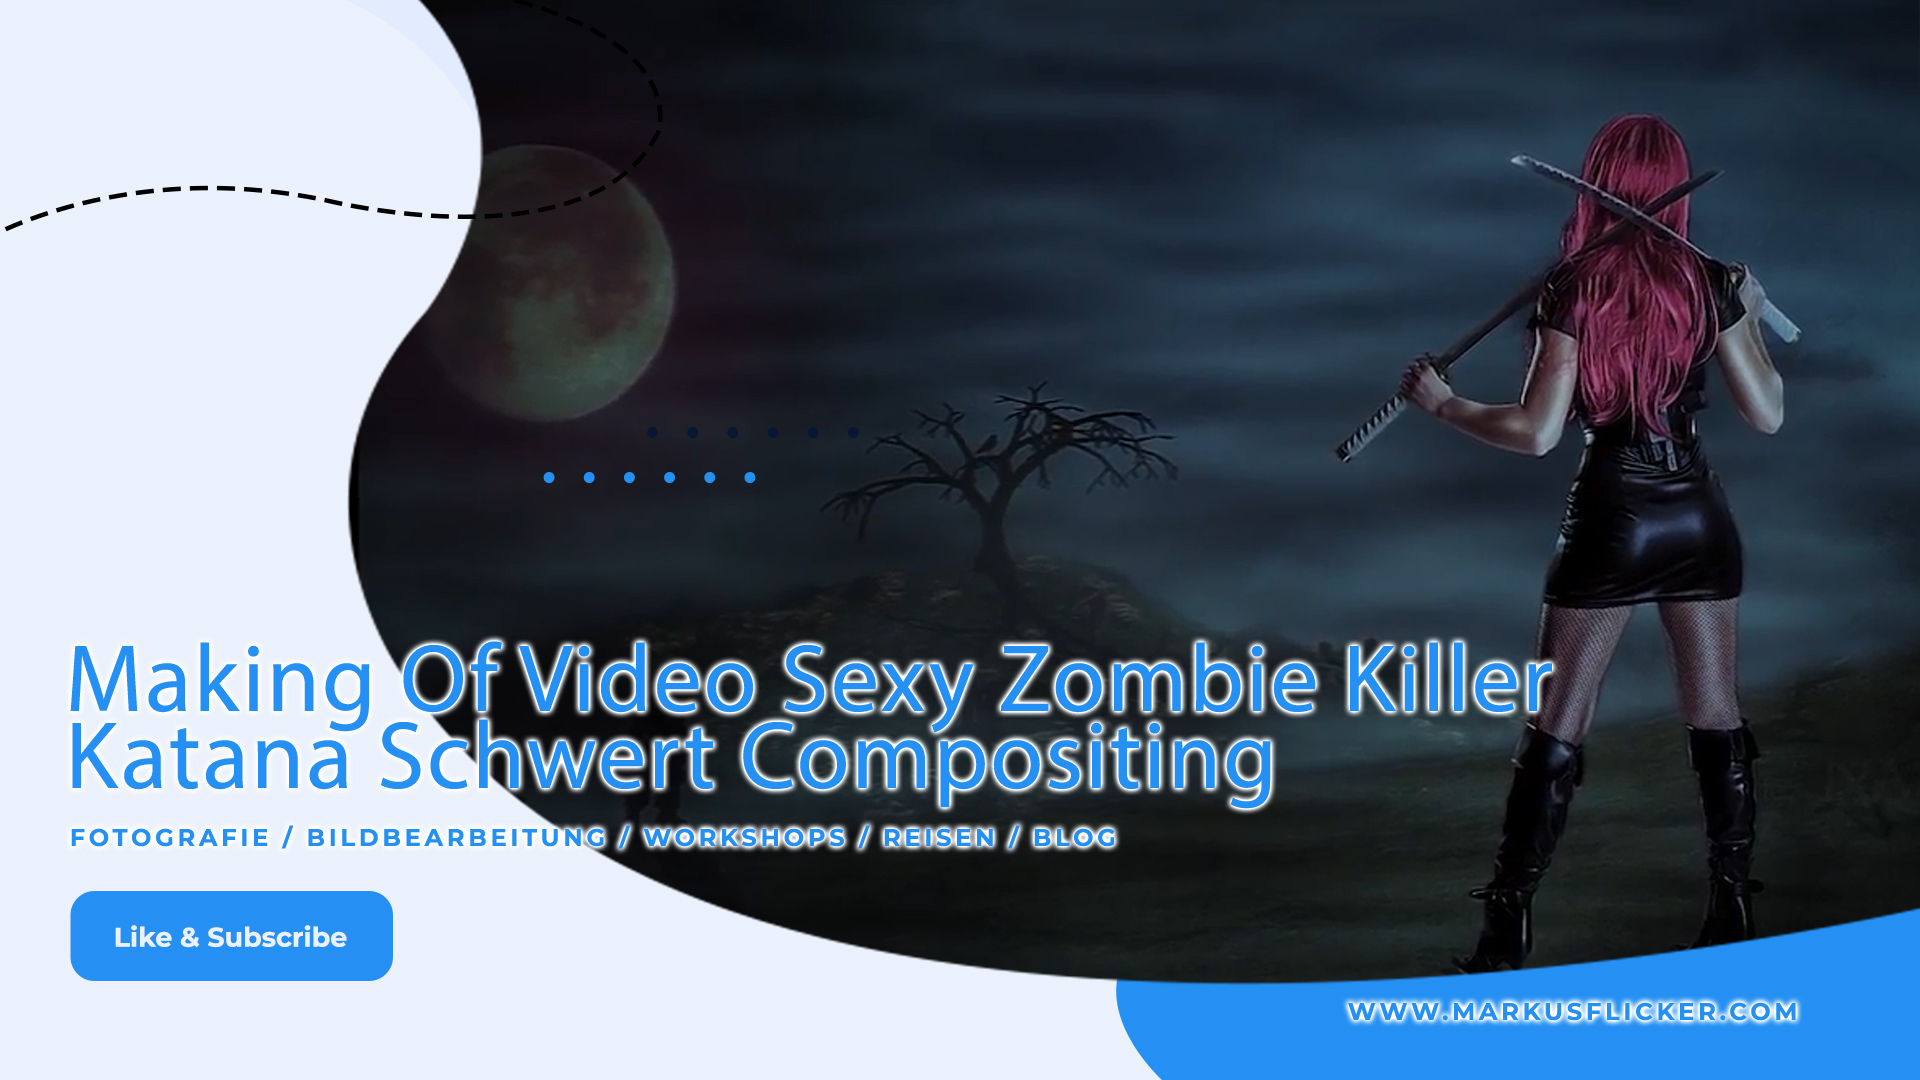 Making Of Video Sexy Zombie Killer Katana Schwert Compositing [Adobe Photoshop]